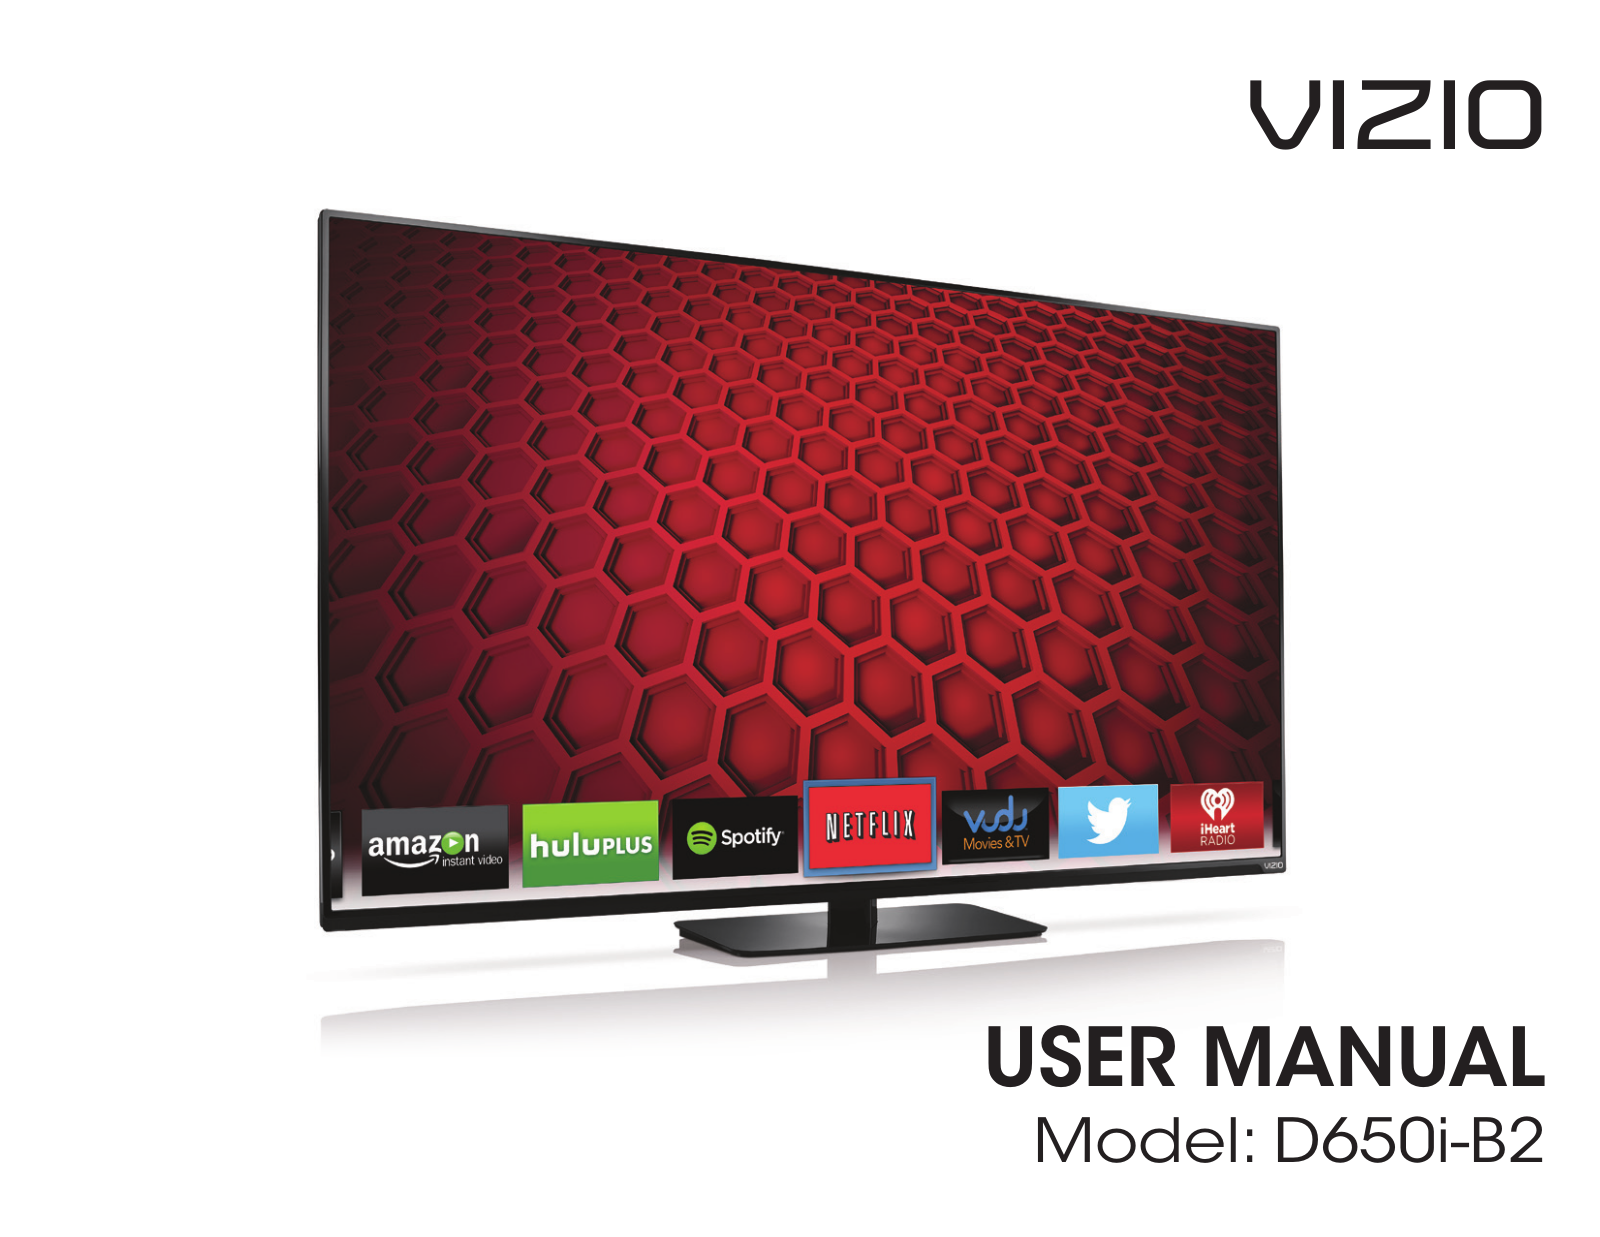 Vizio D650i-B2 User Manual